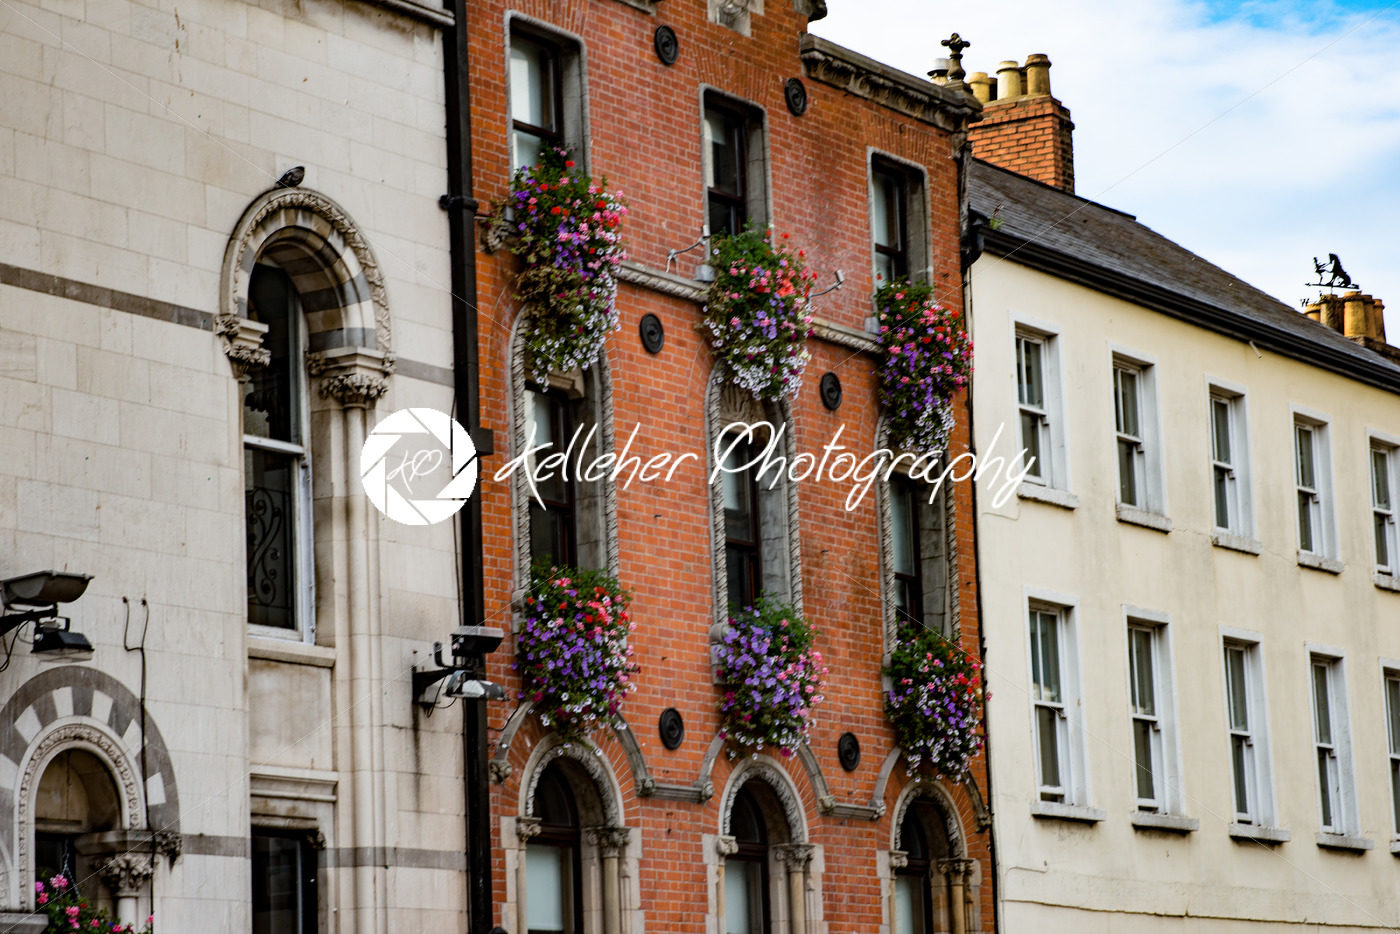 DUBLIN, IRELAND – AUGUST 30, 2017: City of Dublin Ireland - Kelleher Photography Store